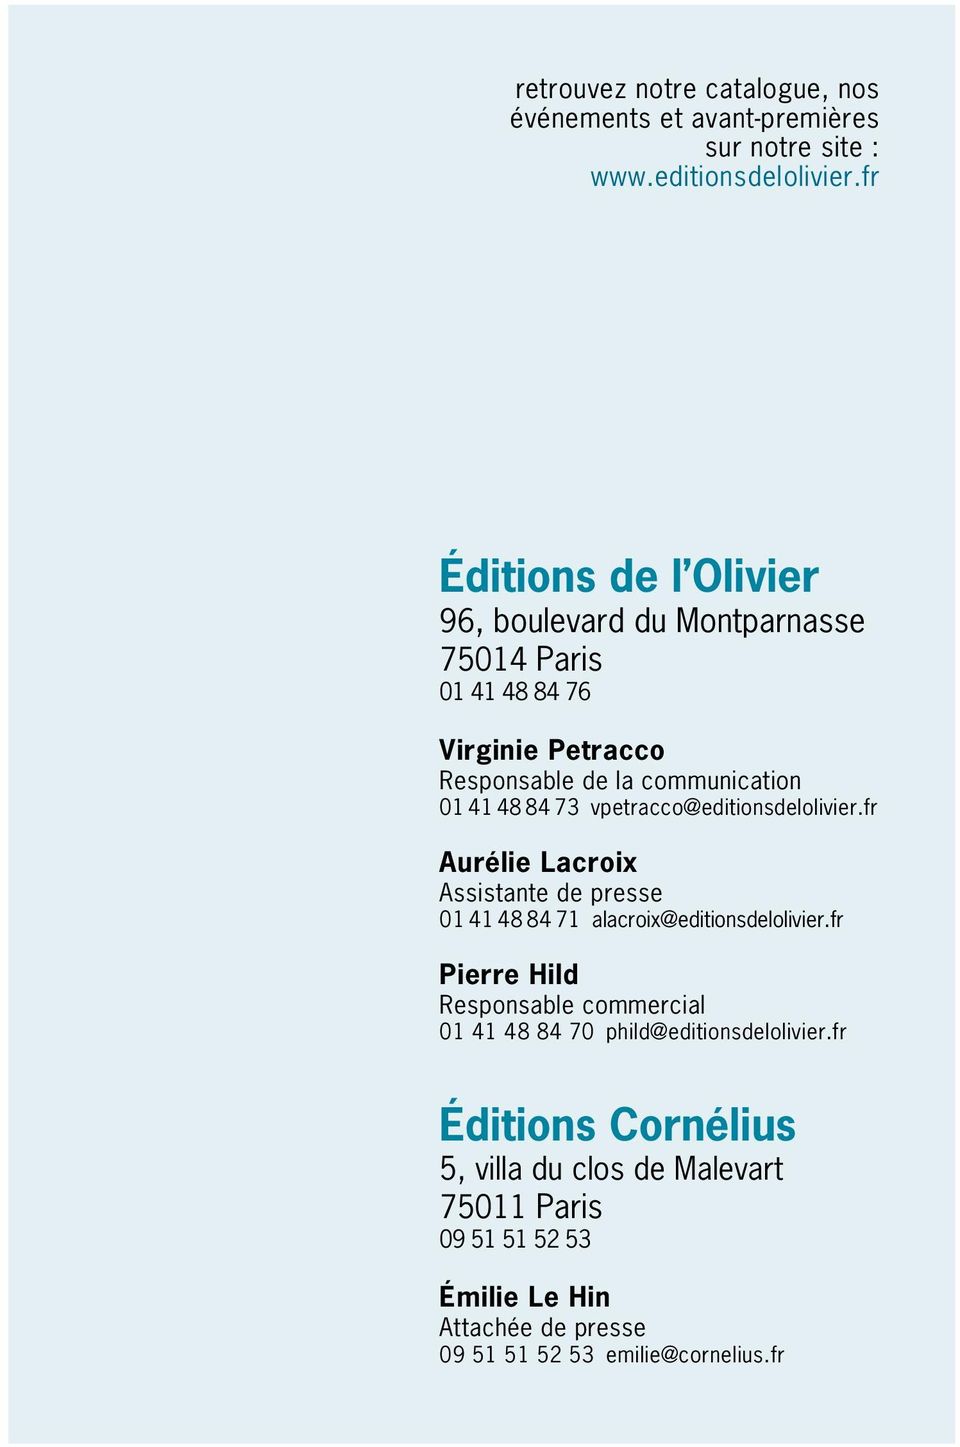 73 vpetracco@editionsdelolivier.fr Aurélie Lacroix Assistante de presse 01 41 48 84 71 alacroix@editionsdelolivier.